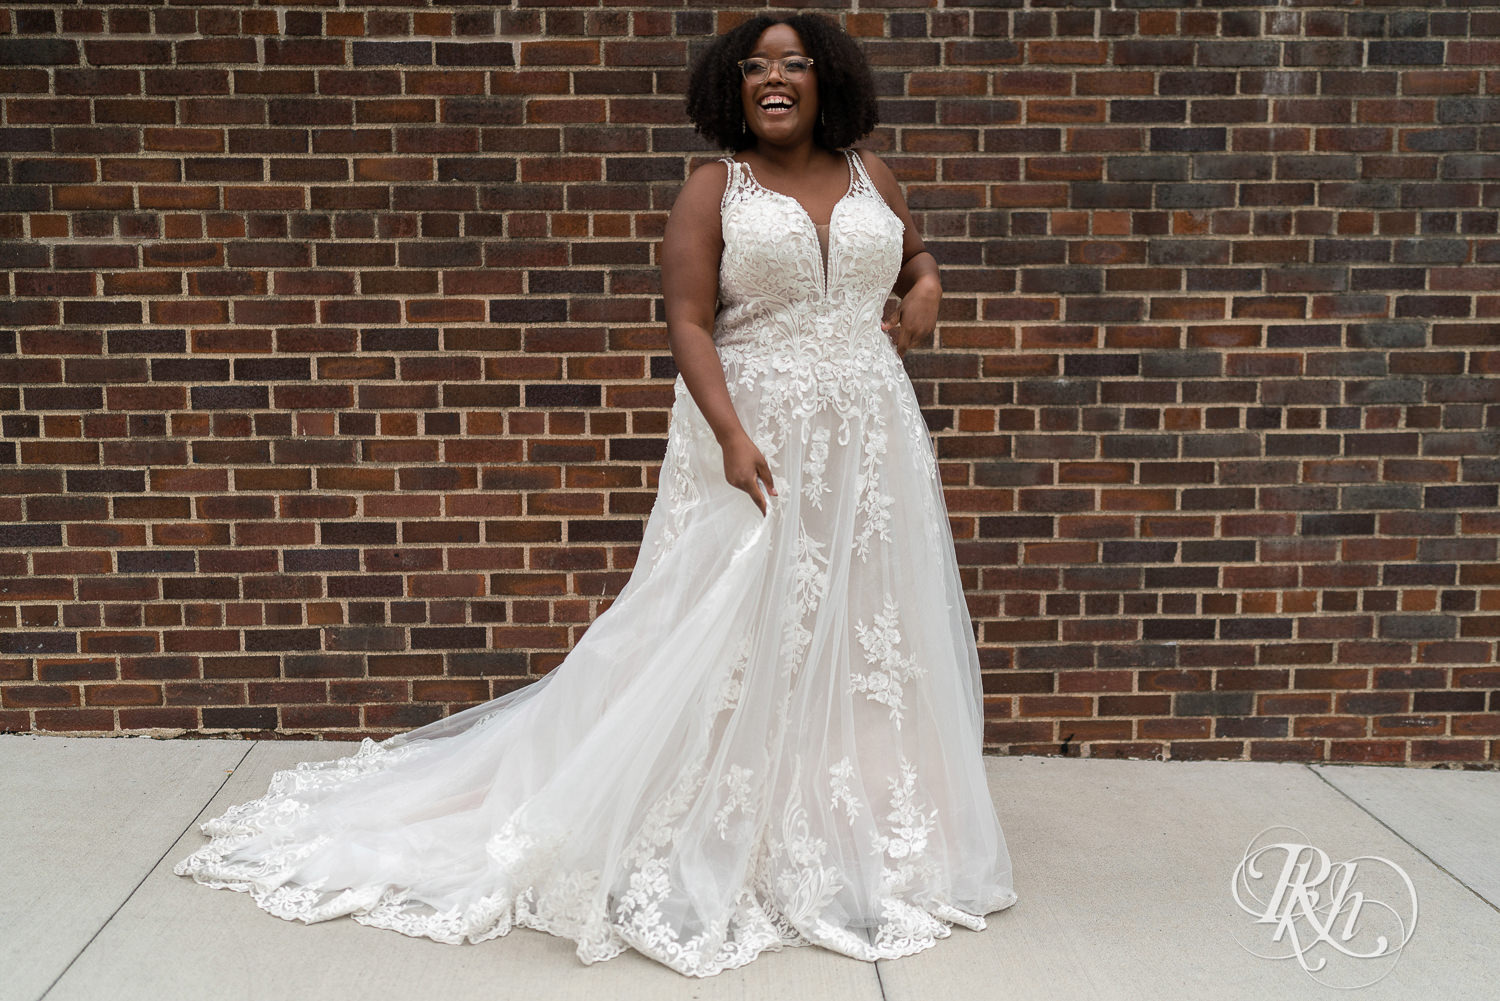 Black plus size bride smiling in wedding dress in Minneapolis, Minnesota.